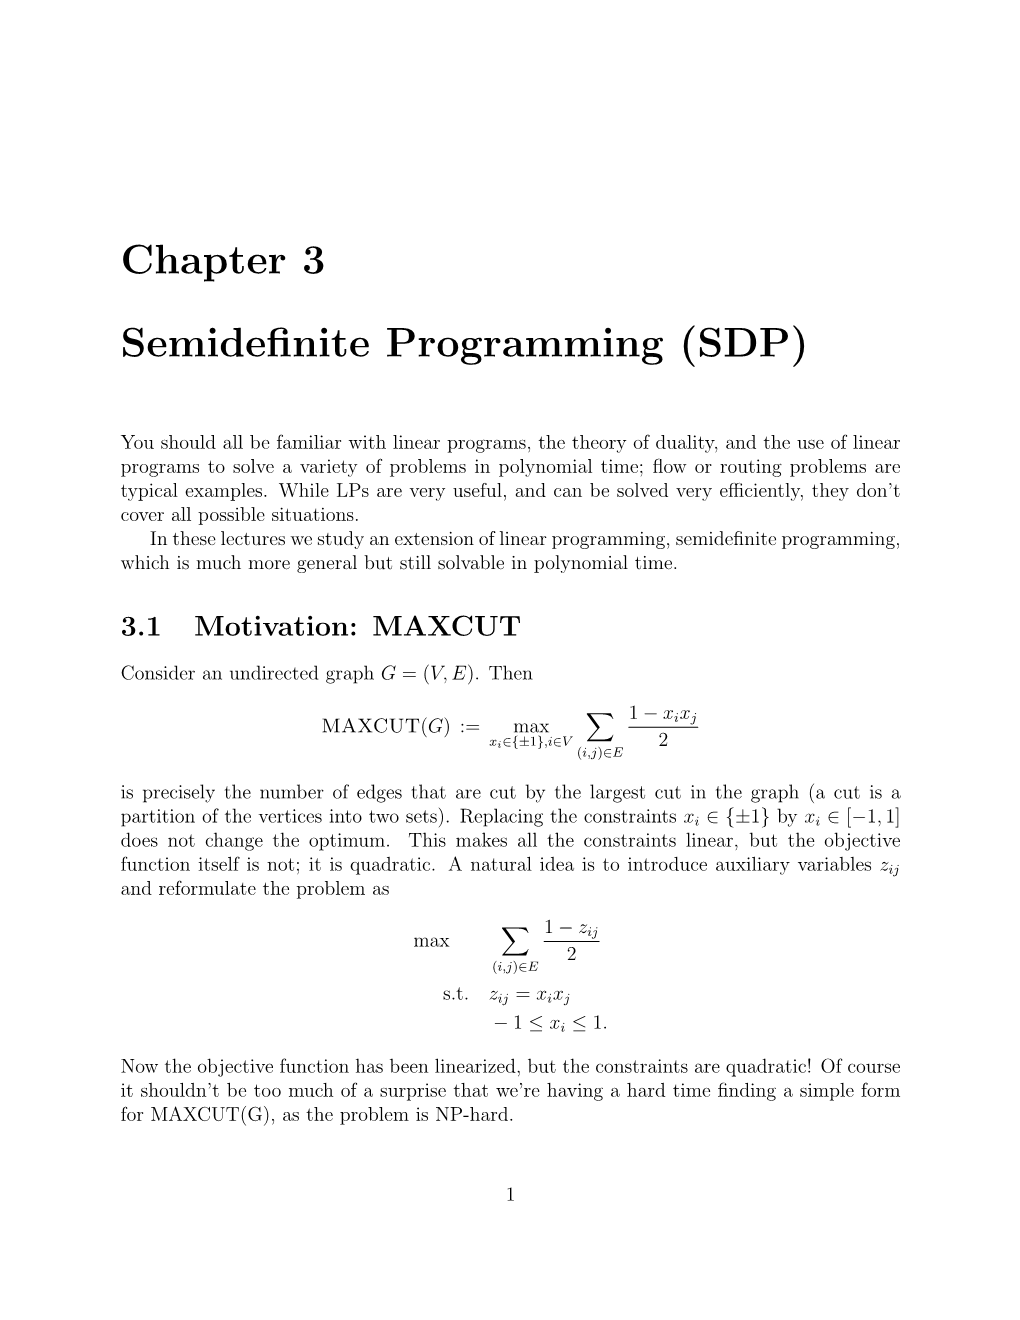 Chapter 3 Semidefinite Programming (SDP)